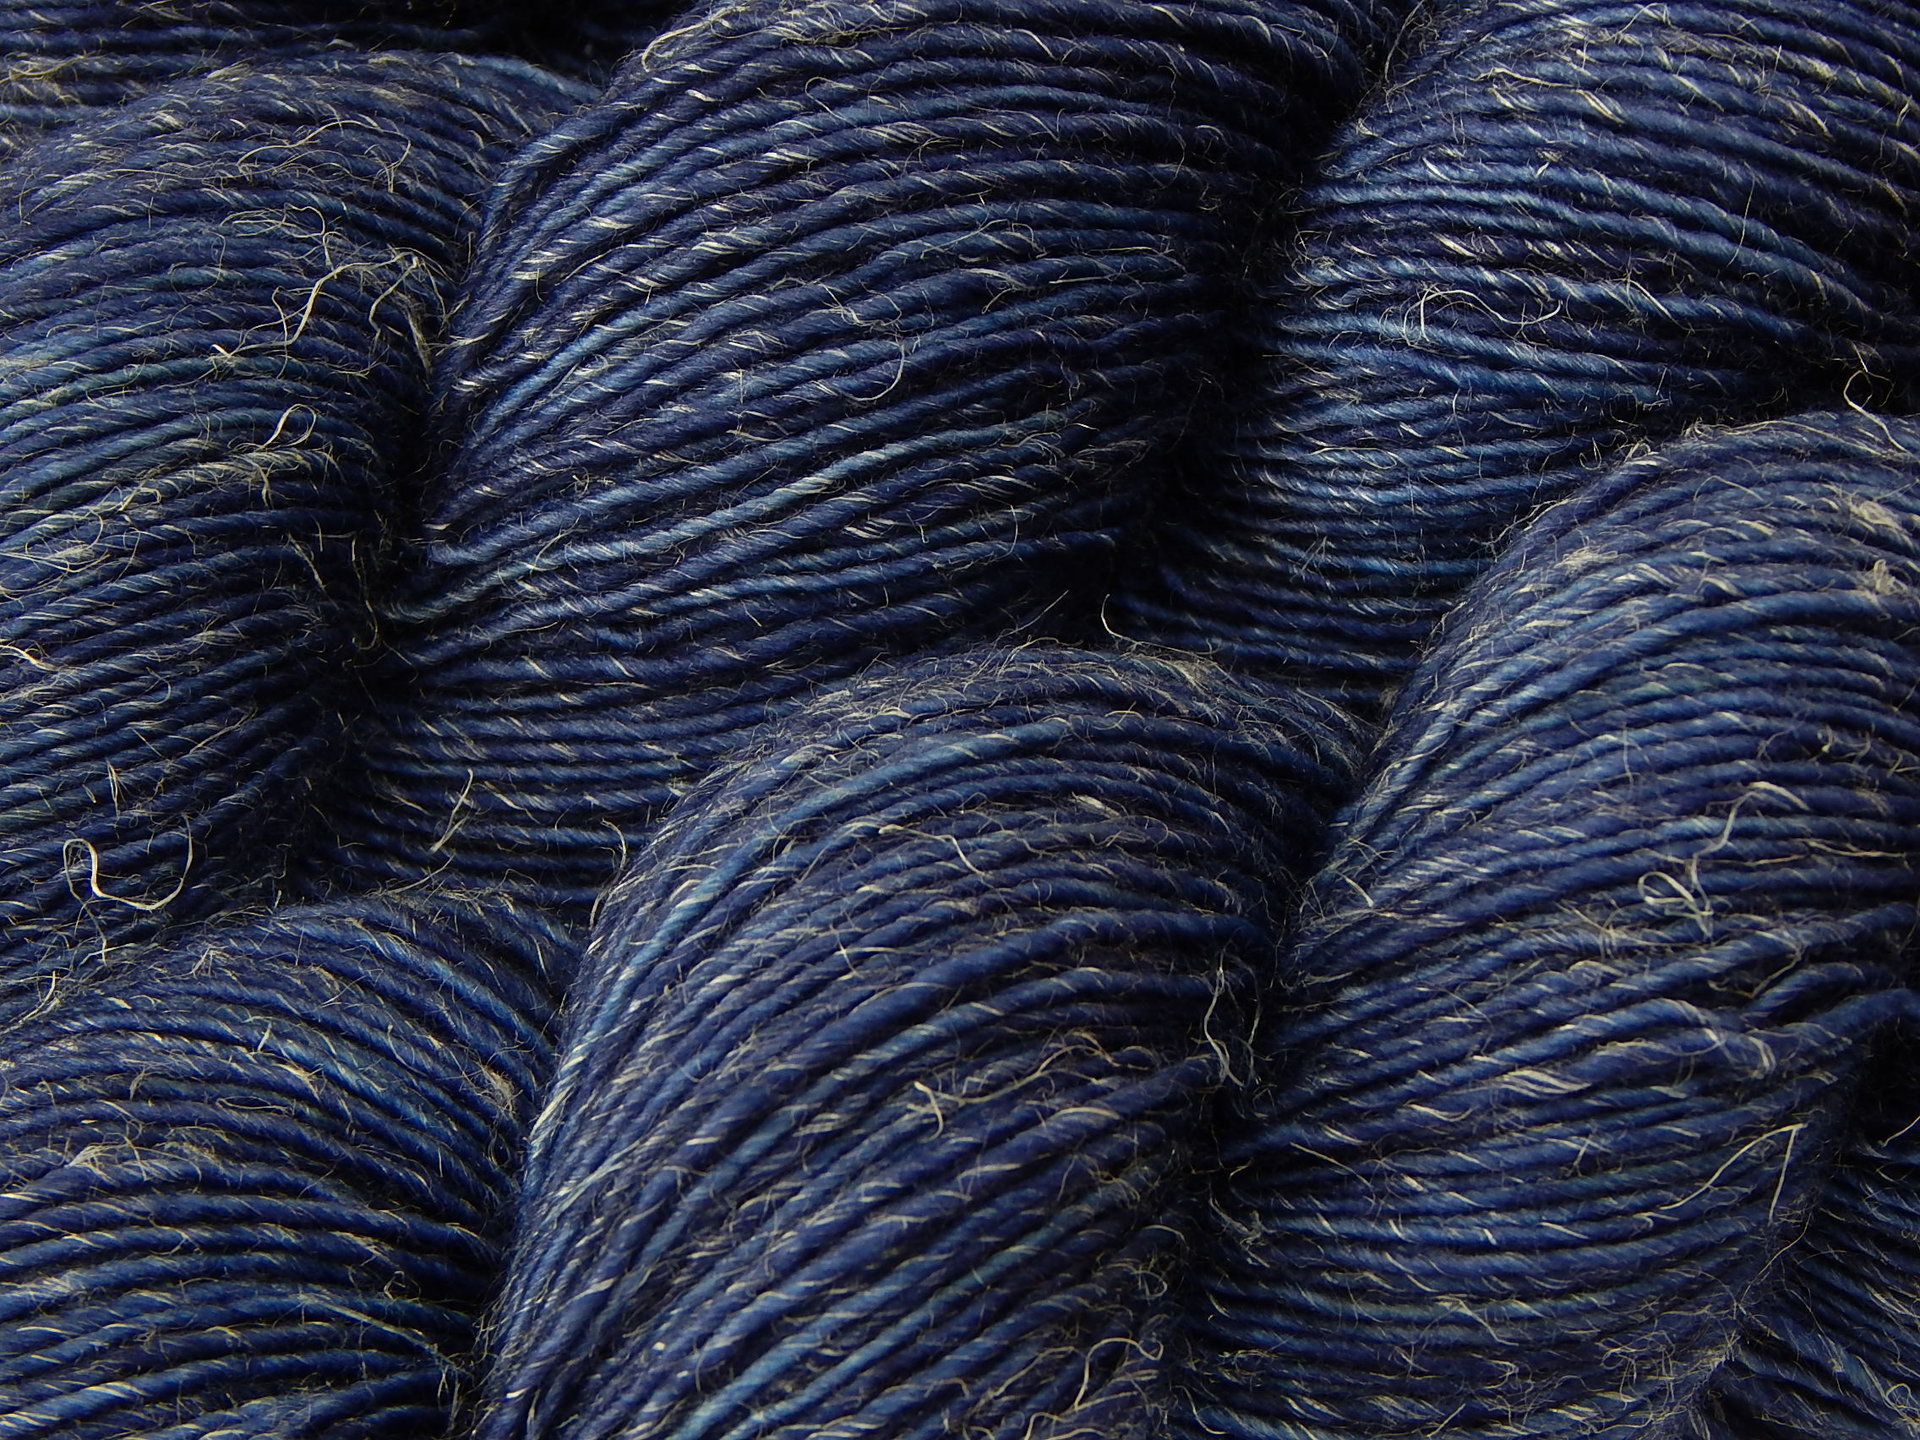 Limited Edition! Hand Dyed Yarn, Sock Fingering Weight Superwash Merino Wool & Linen Blend - Ink Tonal - Navy Blue Indie Dyer Knitting Yarn